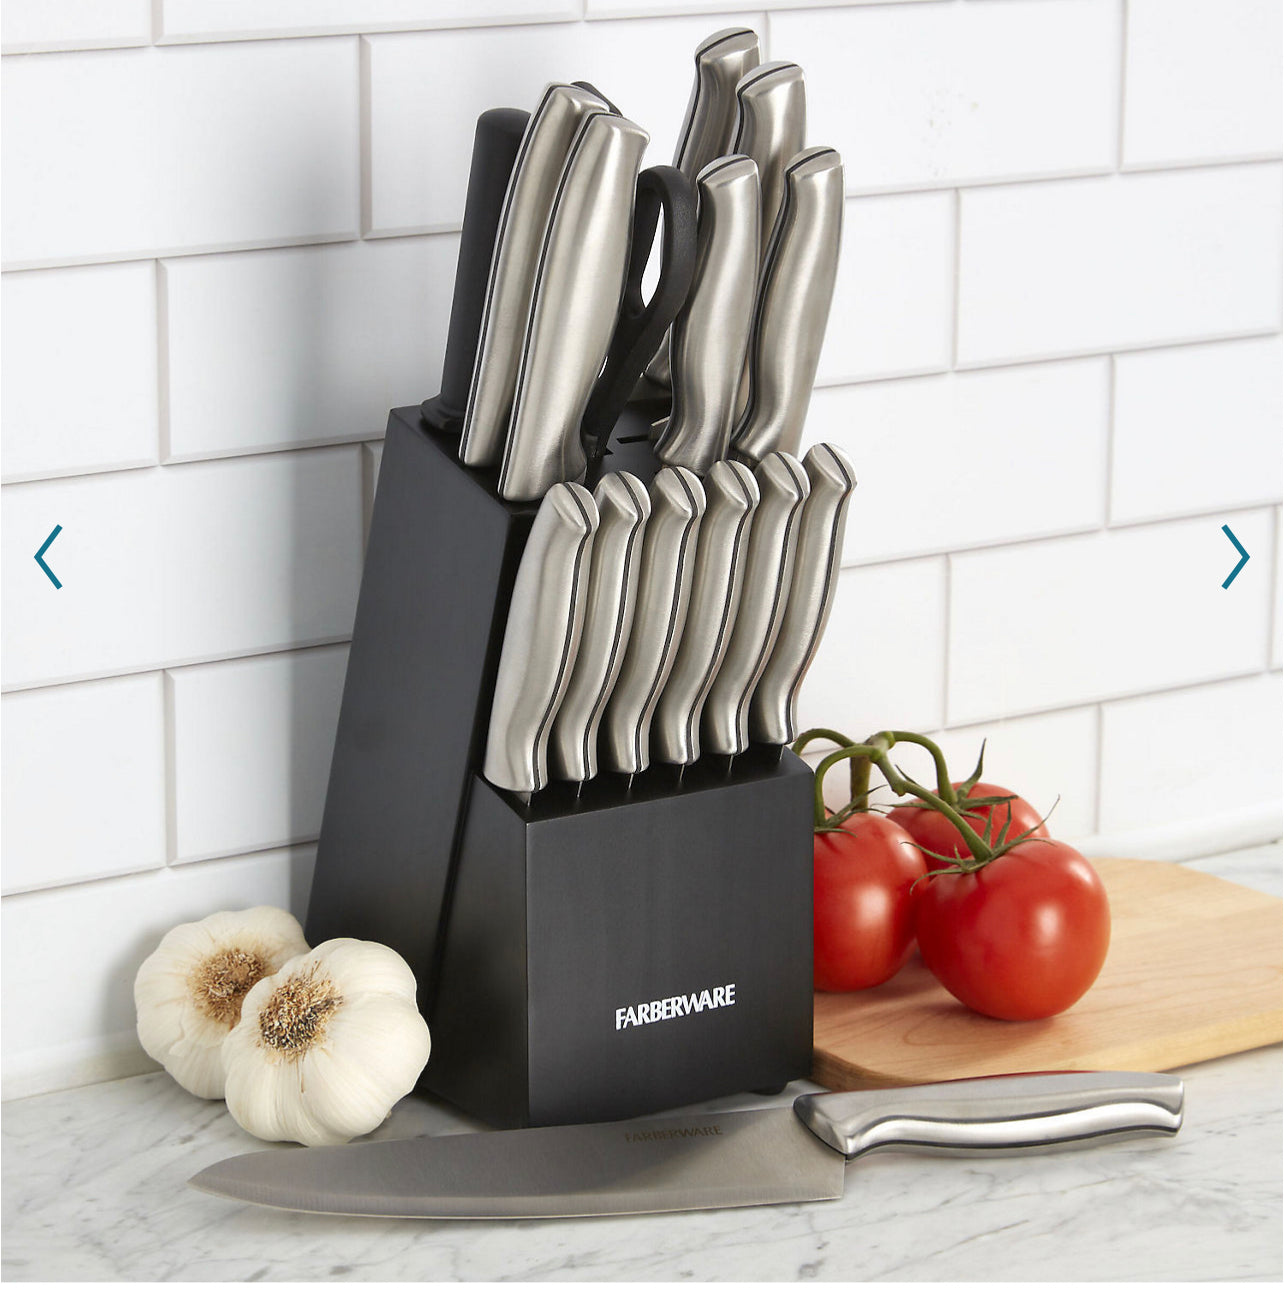 Farberware Platinum Stainless Steel Cutlery Set